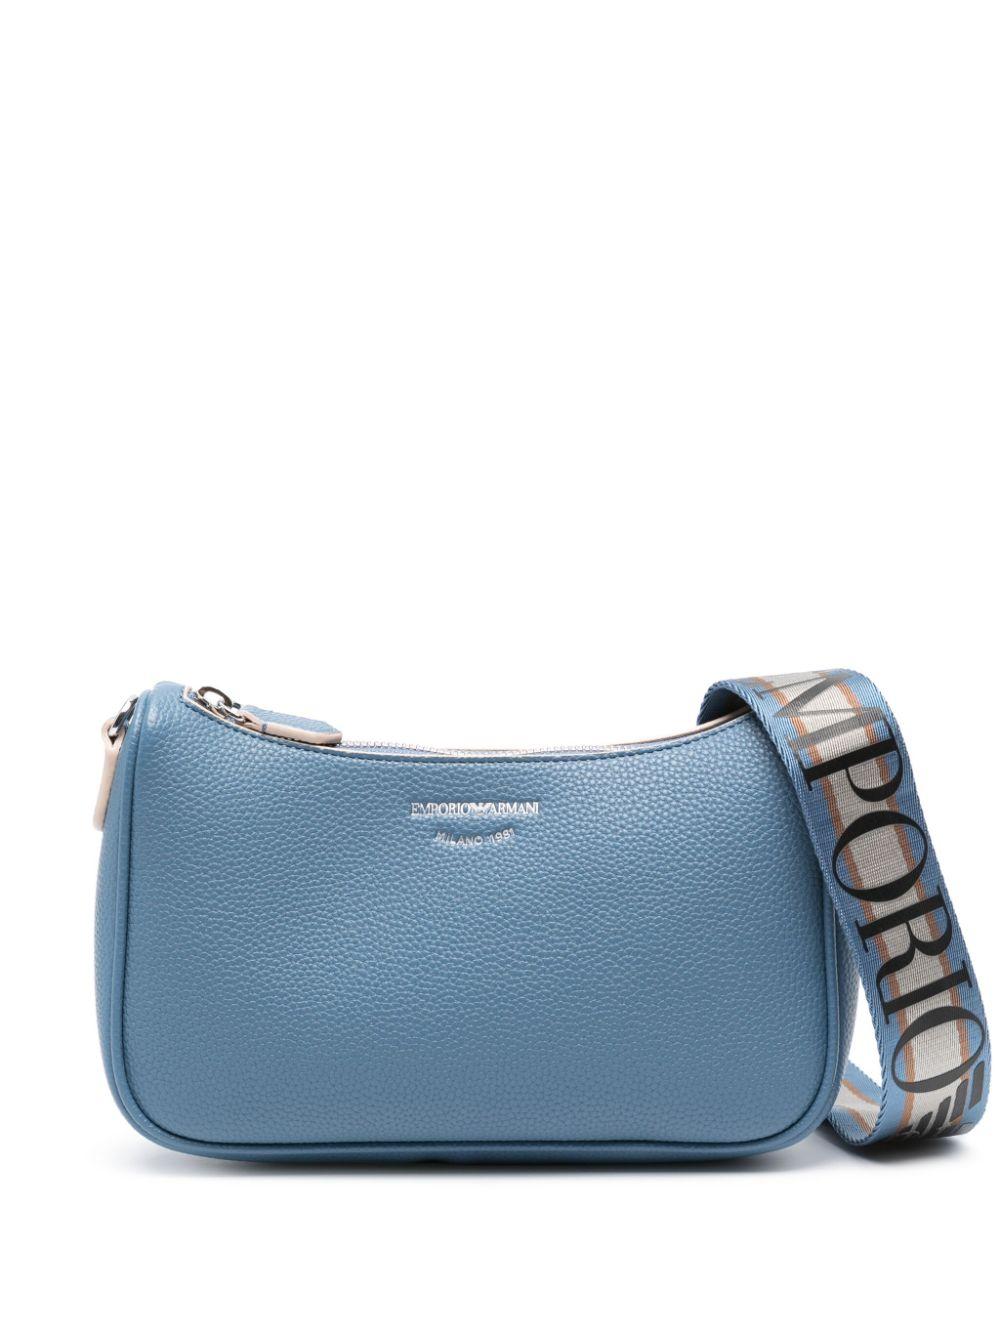 Emporio Armani Women's Blue Shoulder Bags